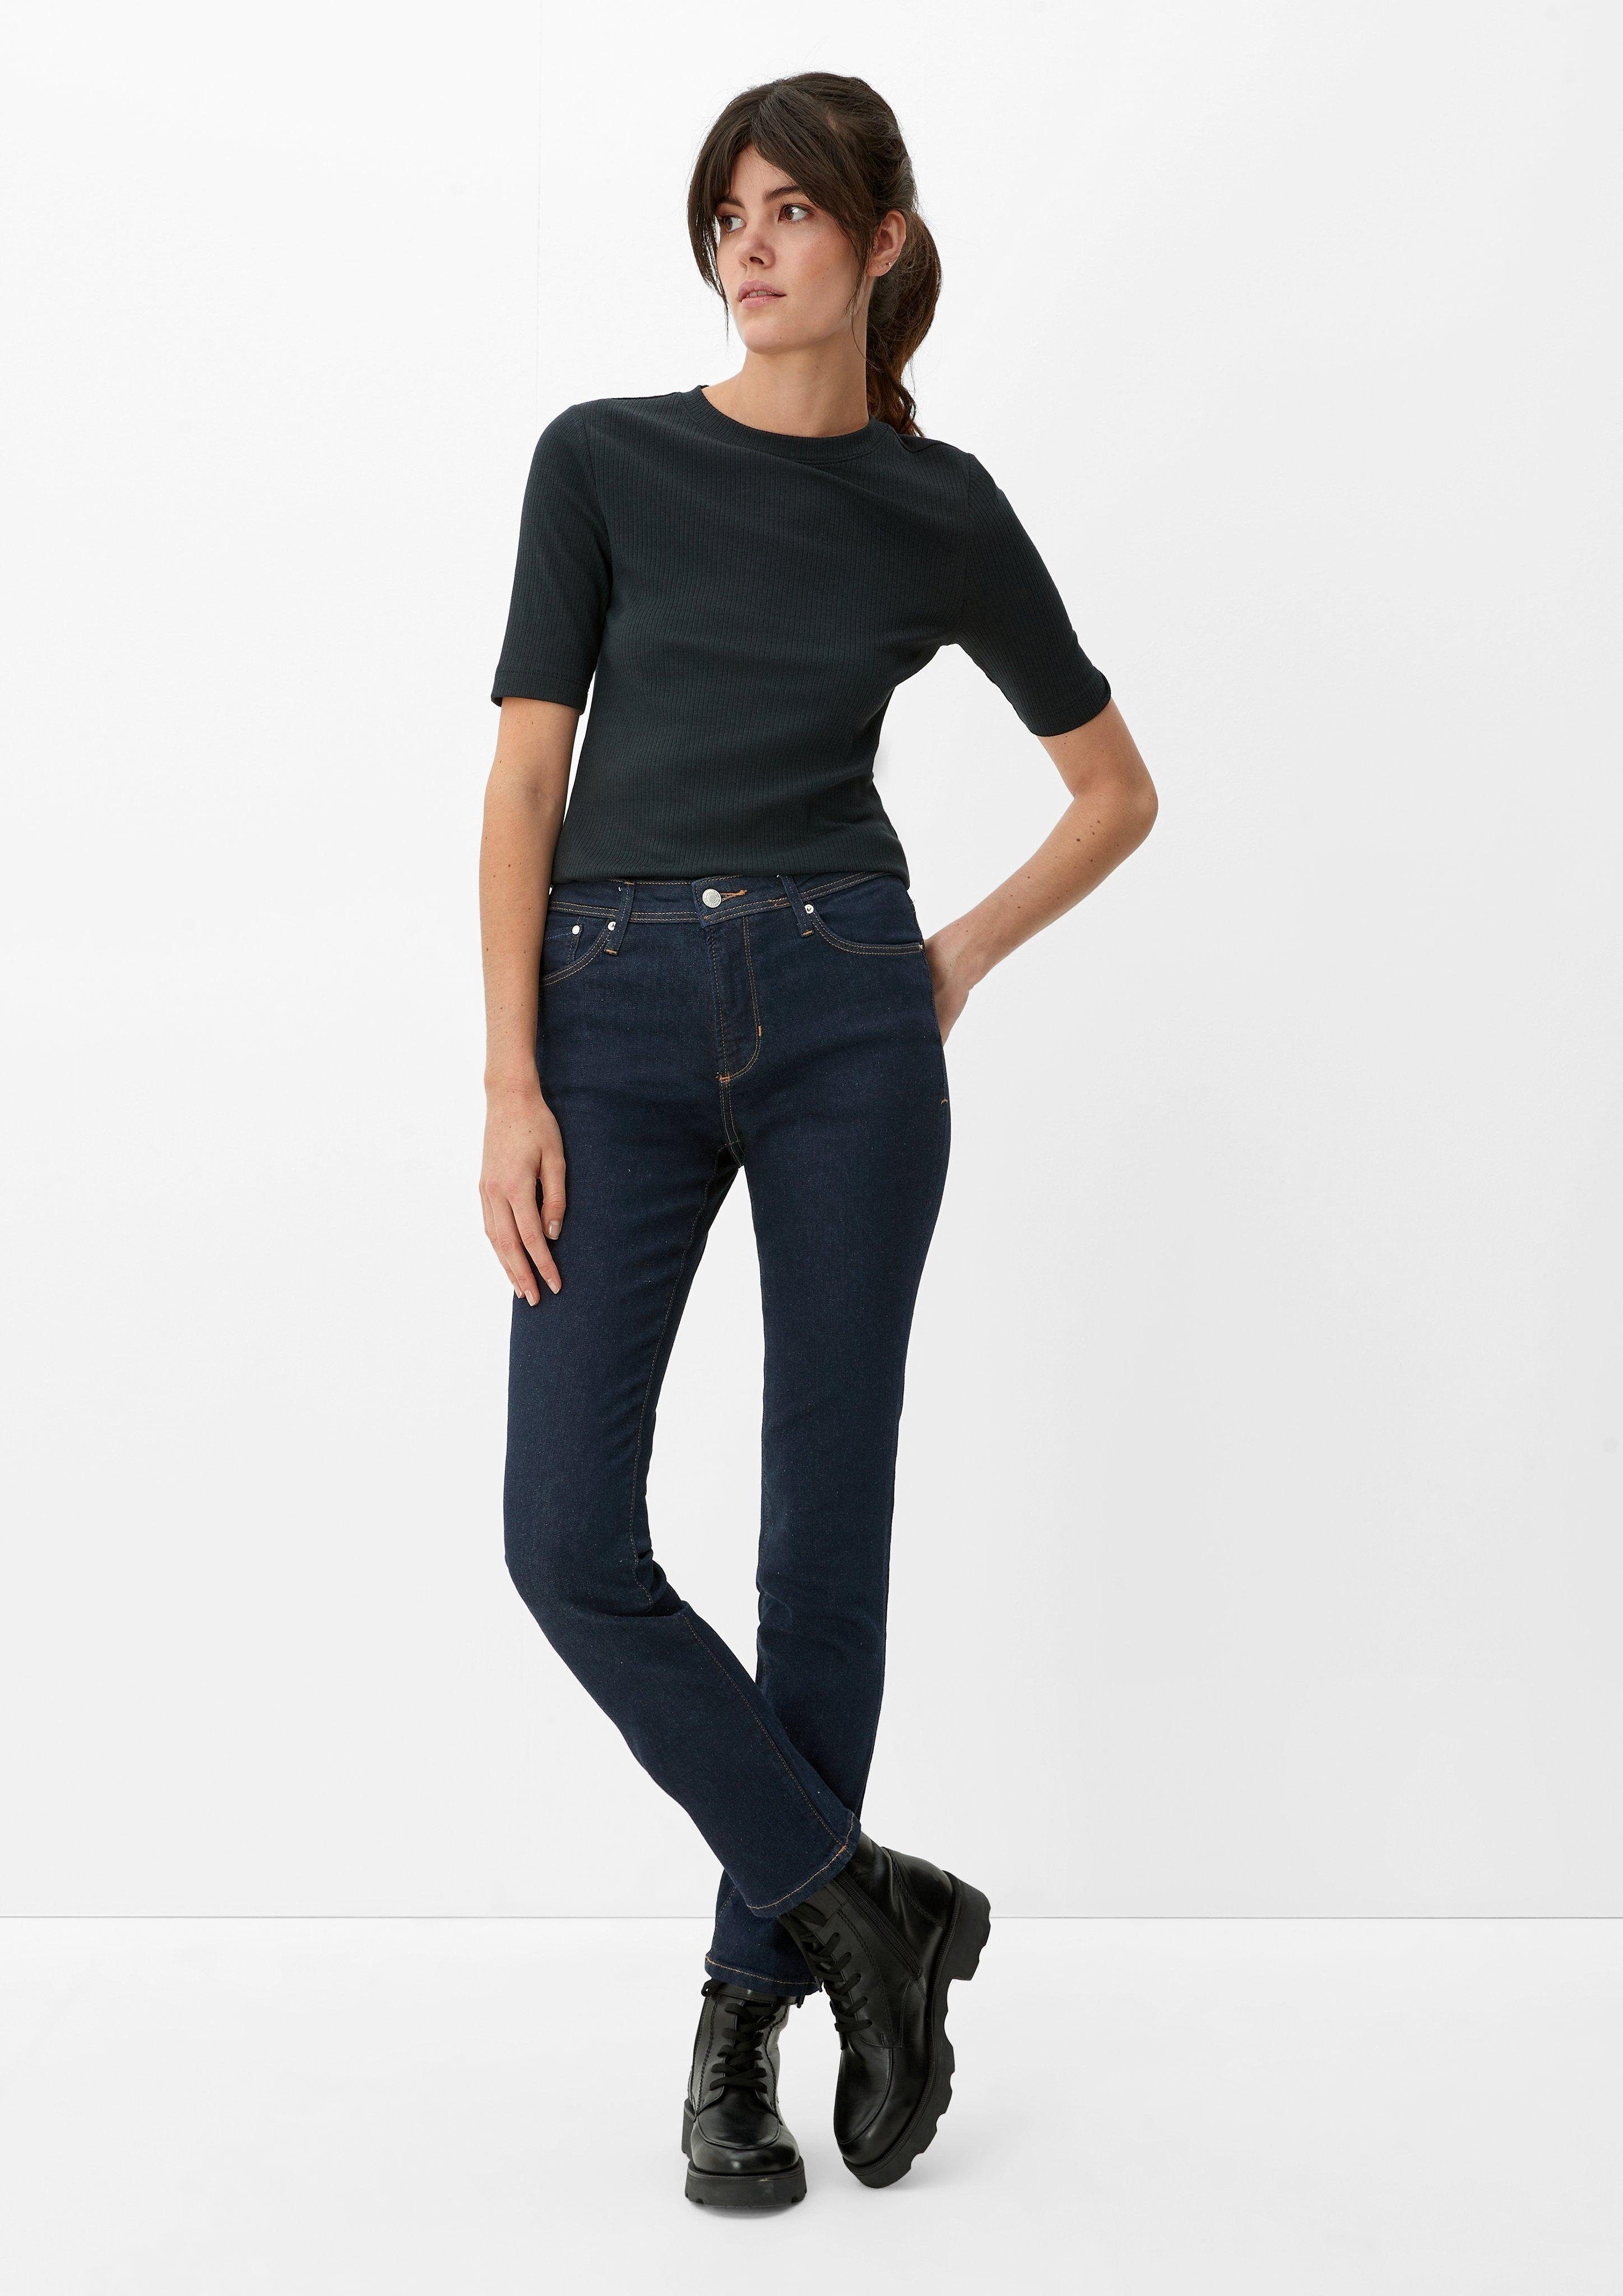 Mid Slim 5-Pocket-Jeans / Fit / Rise s.Oliver / tiefblau Jeans Betsy Leg Waschung Slim